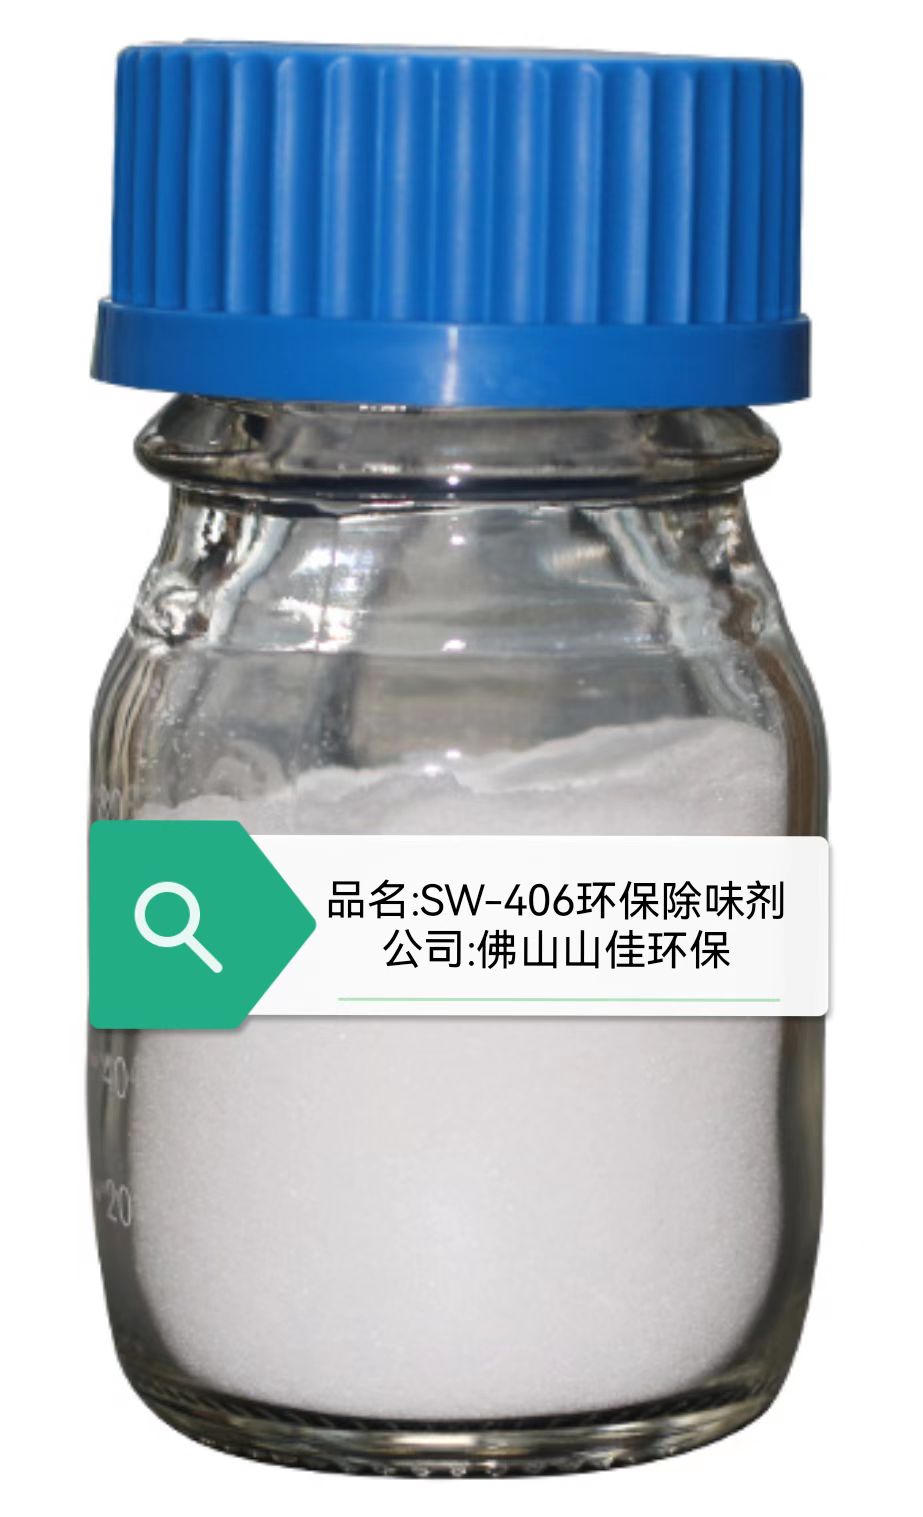 SW-406环保除味剂